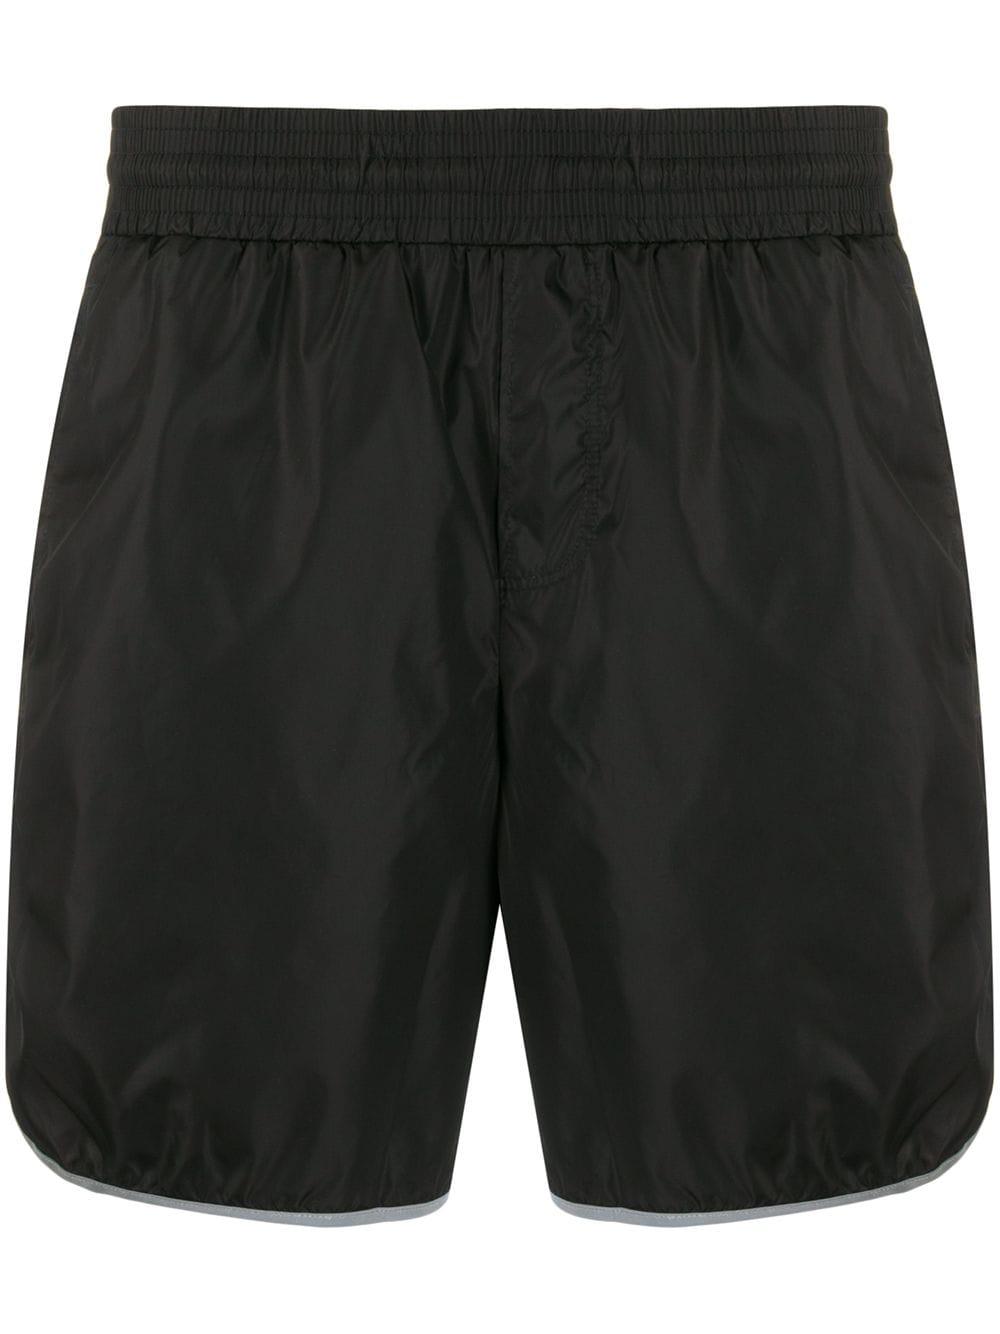 Gucci Interlocking G Stripe Swim Shorts in Black for Men - Lyst